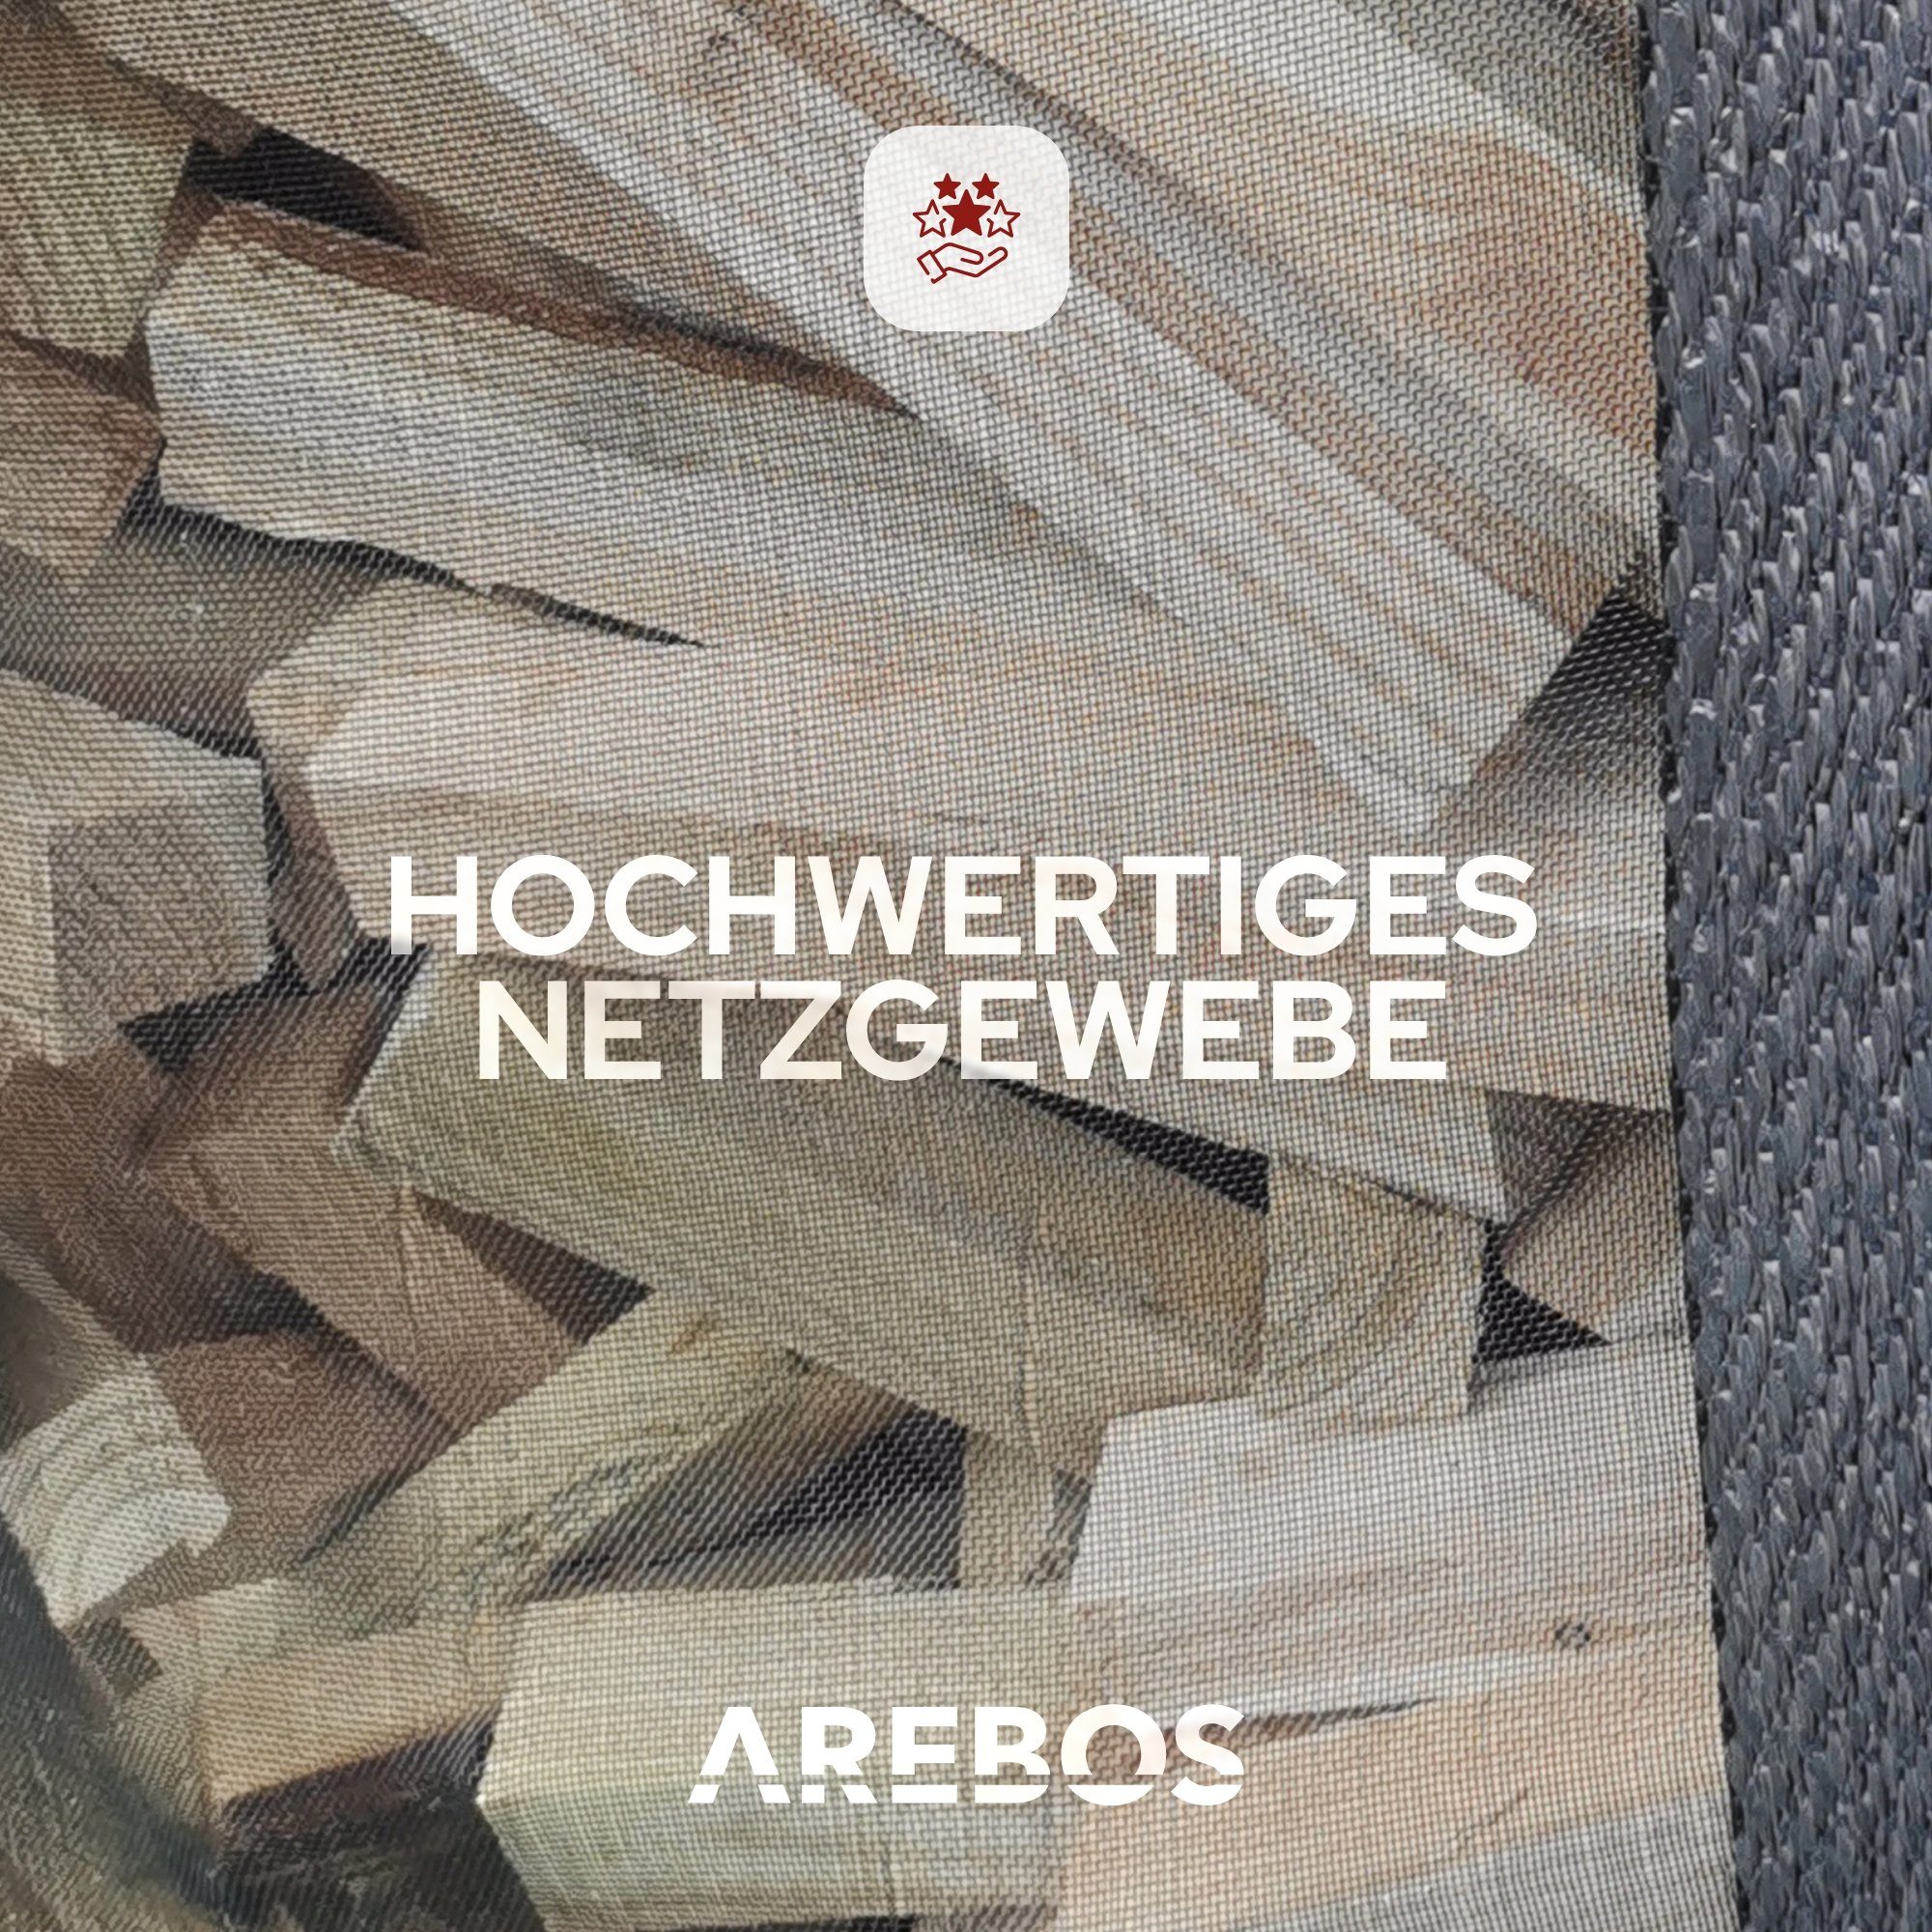 Arebos Kaminholzkorb Holzsack Brennholz Big Brennholzsack für St) Holz Bag (1 Premium Woodbag